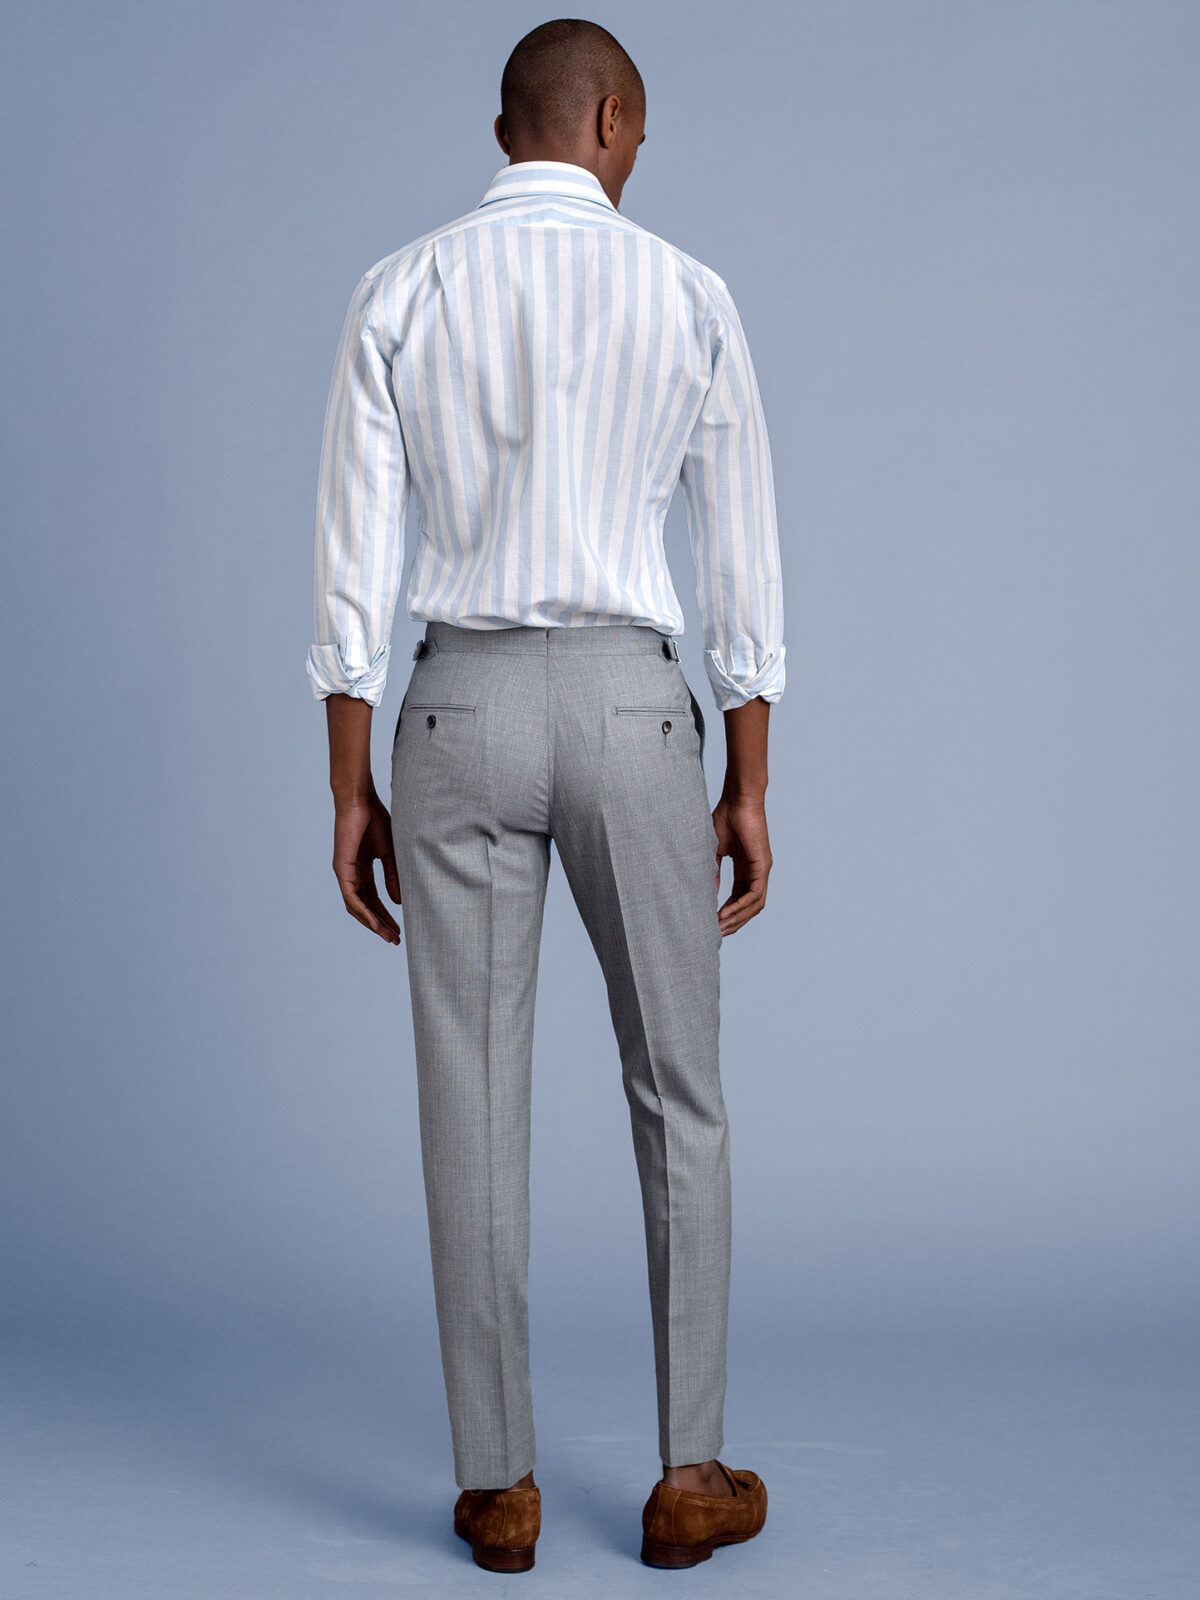 Dressing Light Blue Shirt Gray Pants Stock Photo 178294595 | Shutterstock